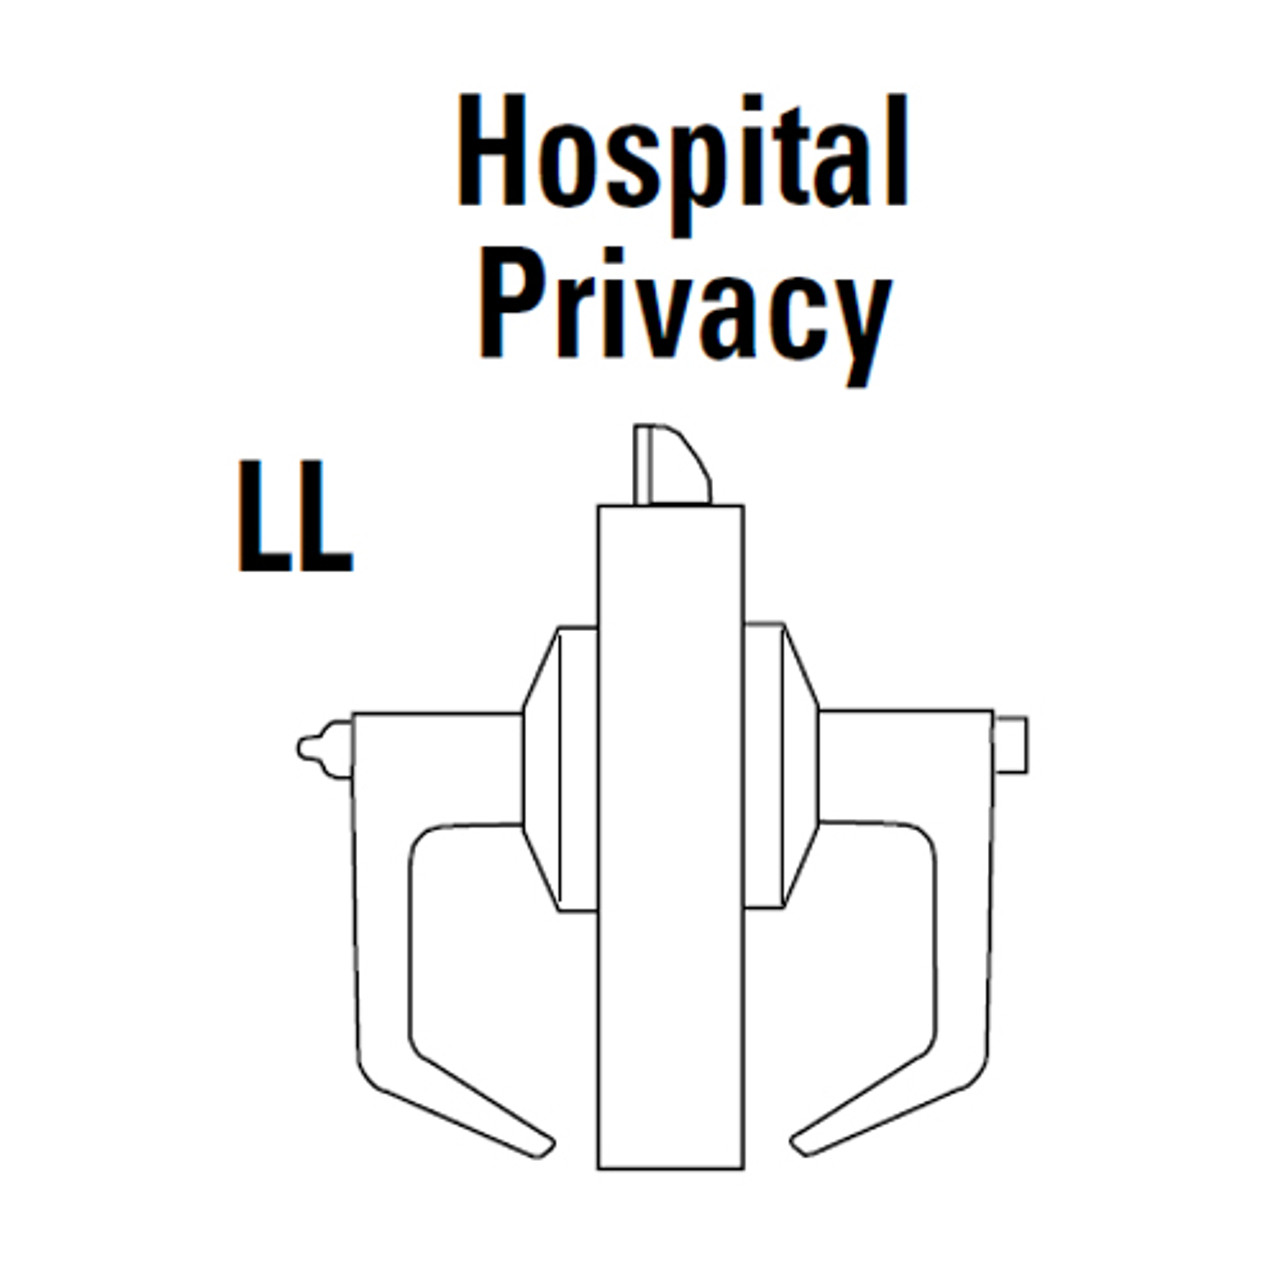 9K30LL14KS3690 Best 9K Series Hospital Privacy Heavy Duty Cylindrical Lever Locks in Dark Bronze